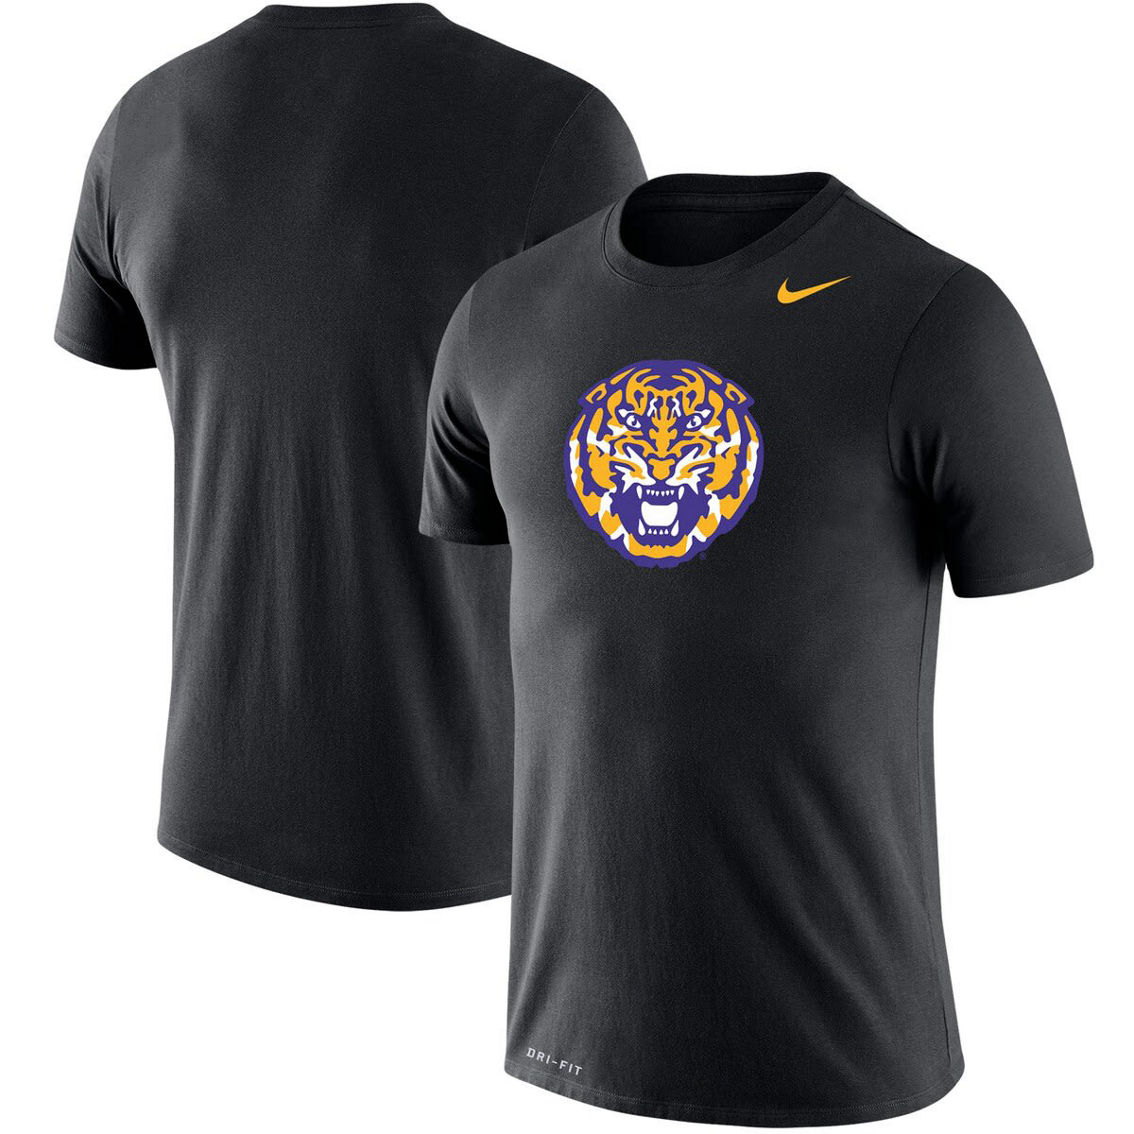 Men's Nike Black LSU Tigers School Logo Legend Performance T-Shirt - Image 2 of 4